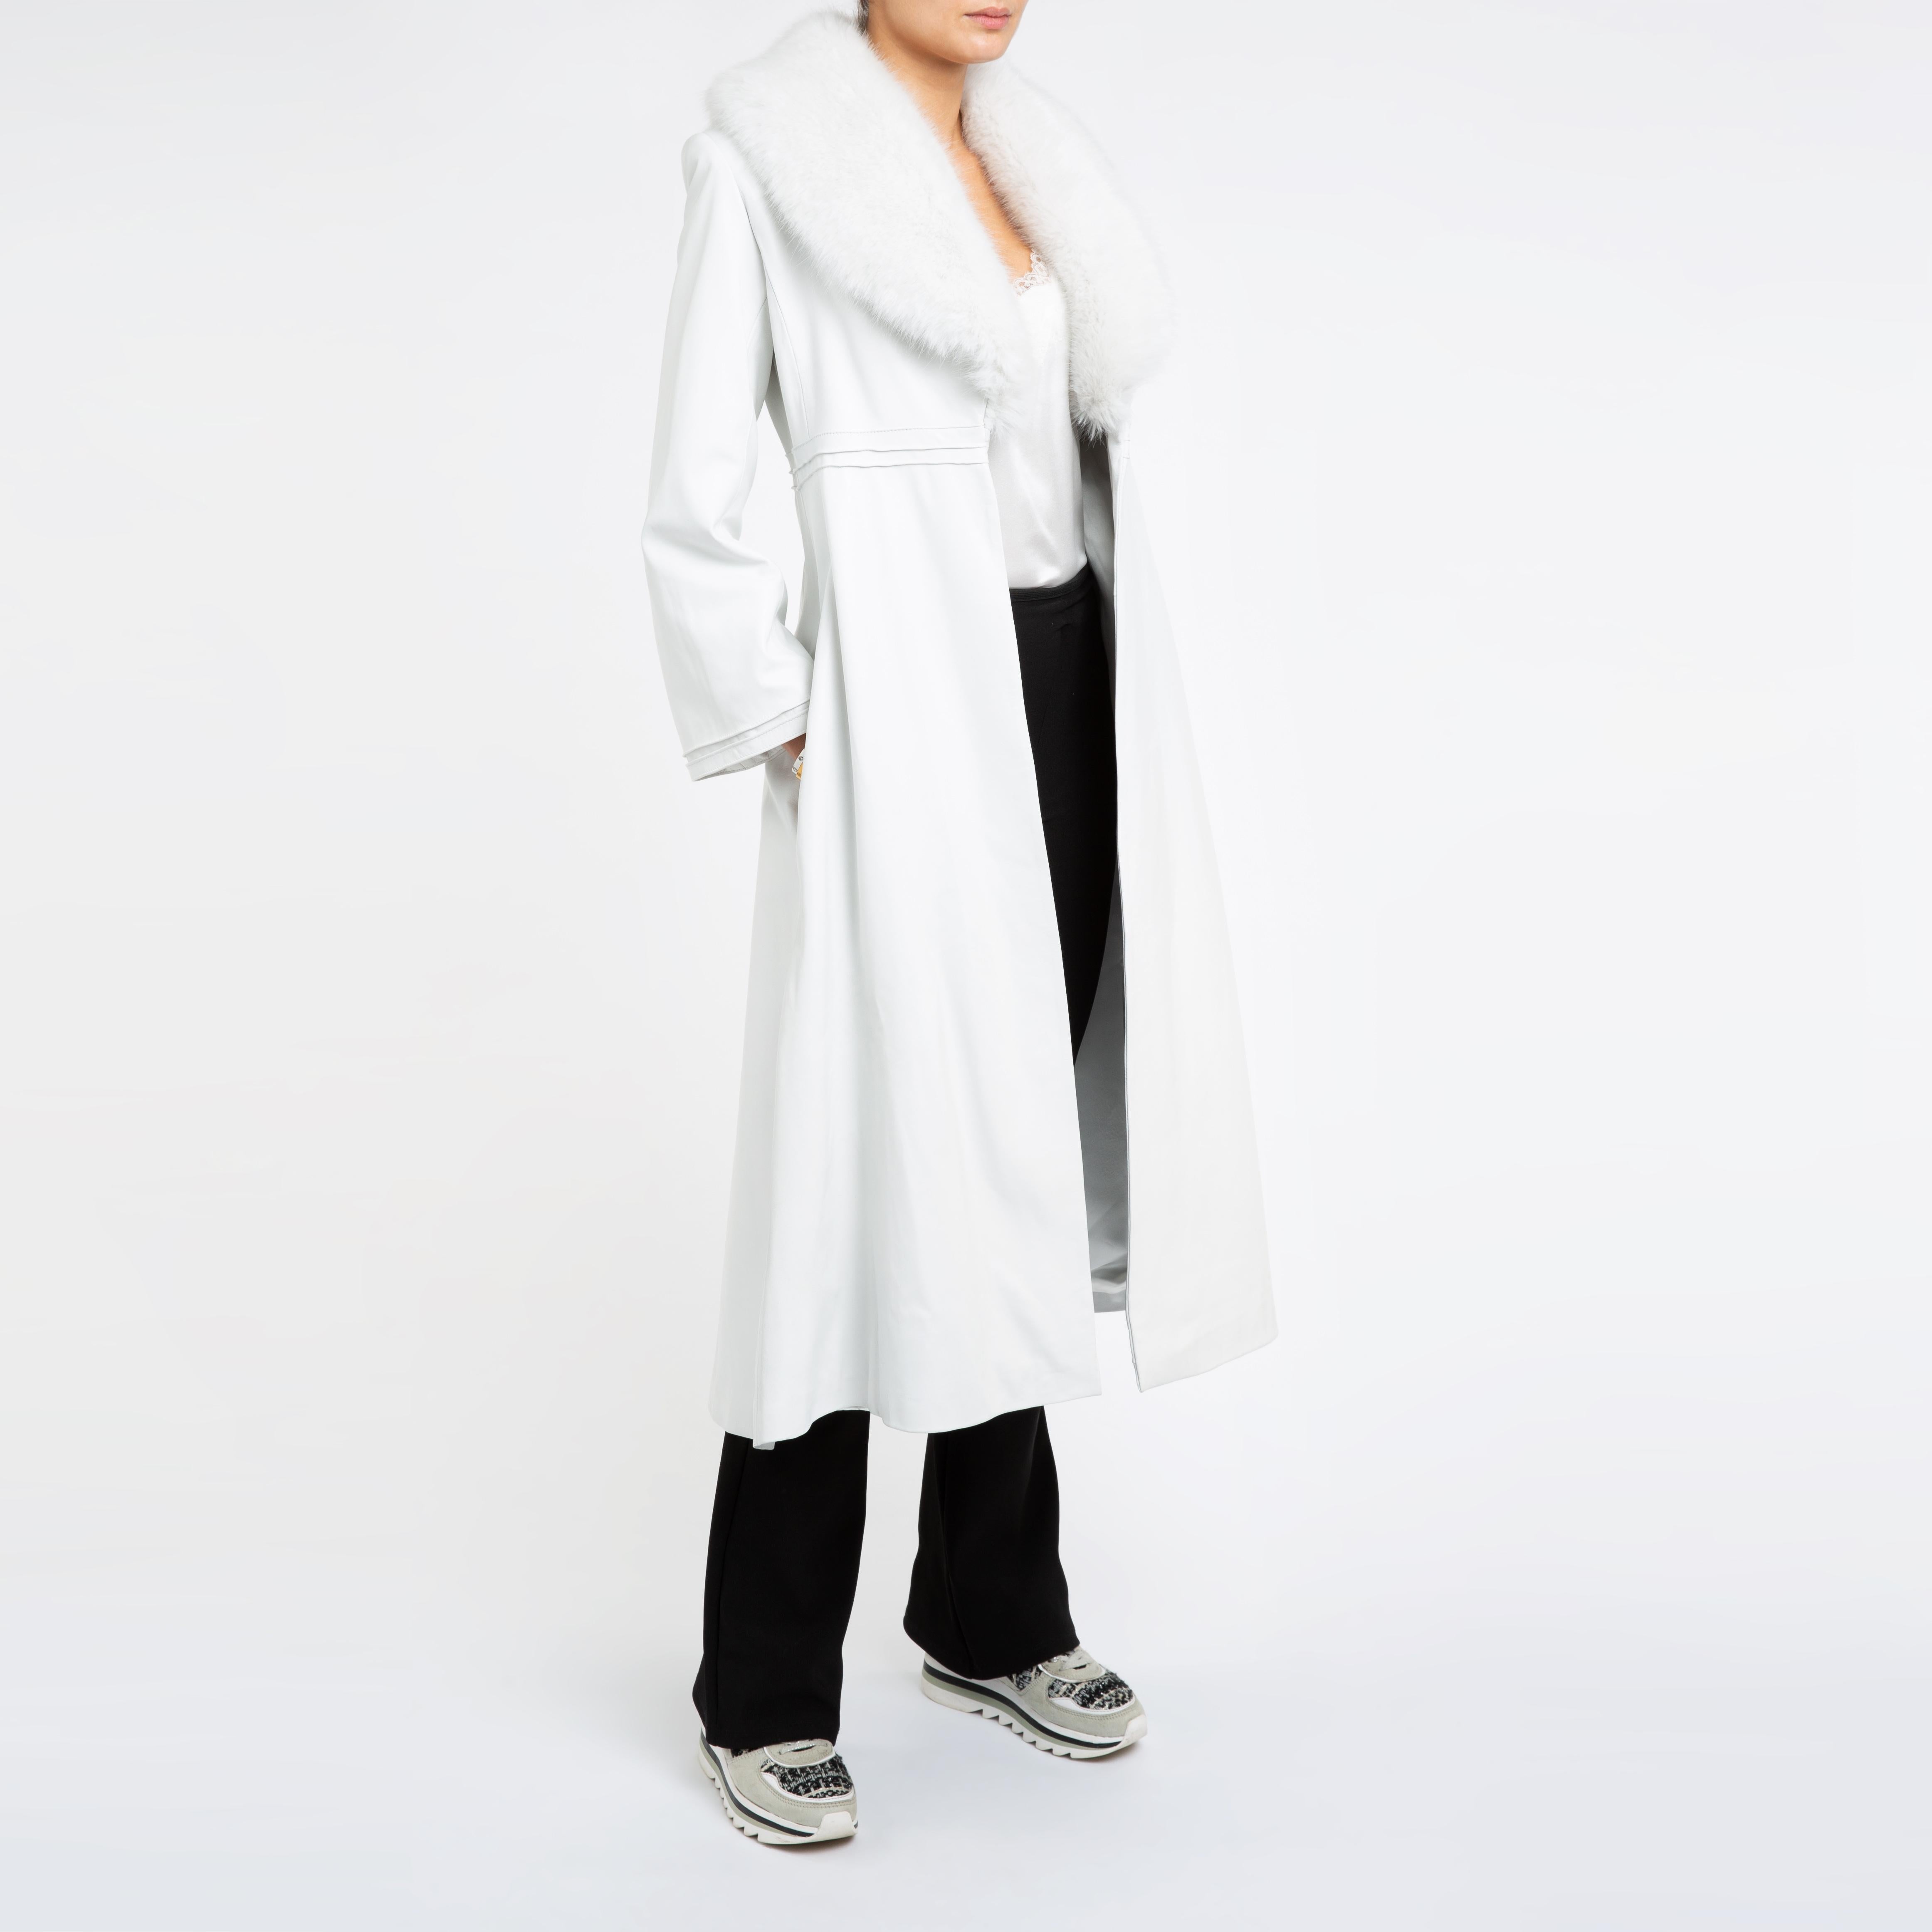 Verheyen London Edward Leather Coat in Aquamarine & White Faux Fur - Size 10 UK  For Sale 1